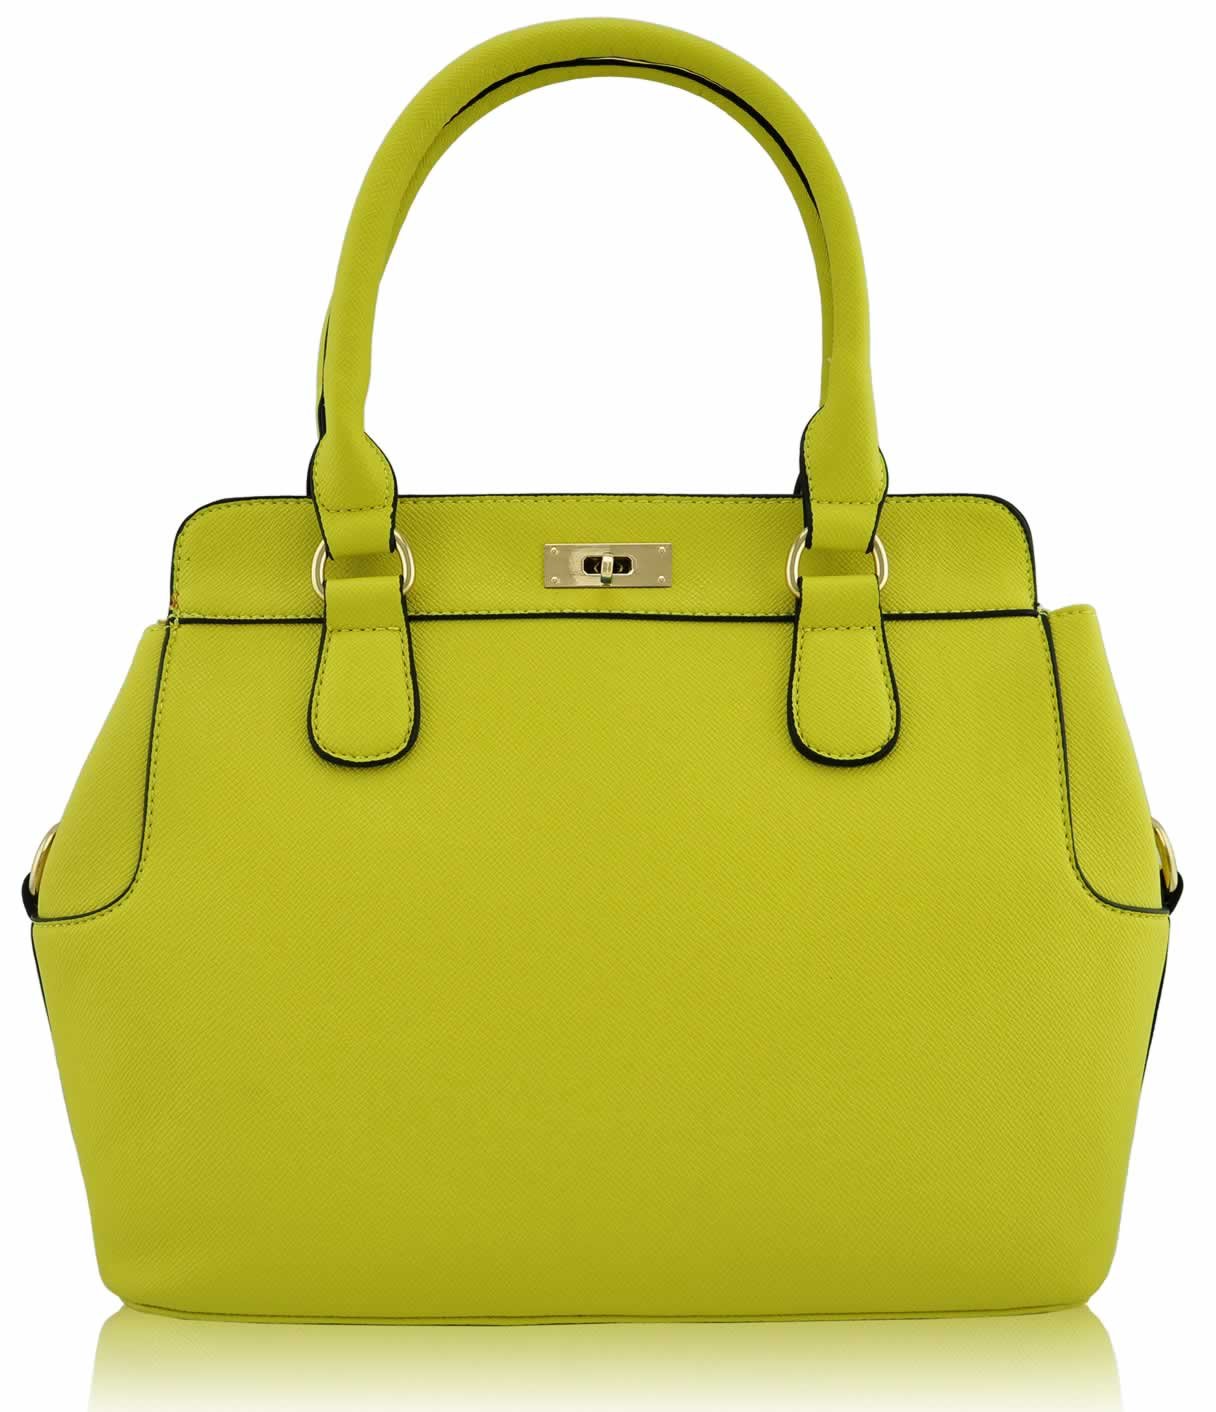 Wholesale Yellow Fashion Tote Handbag